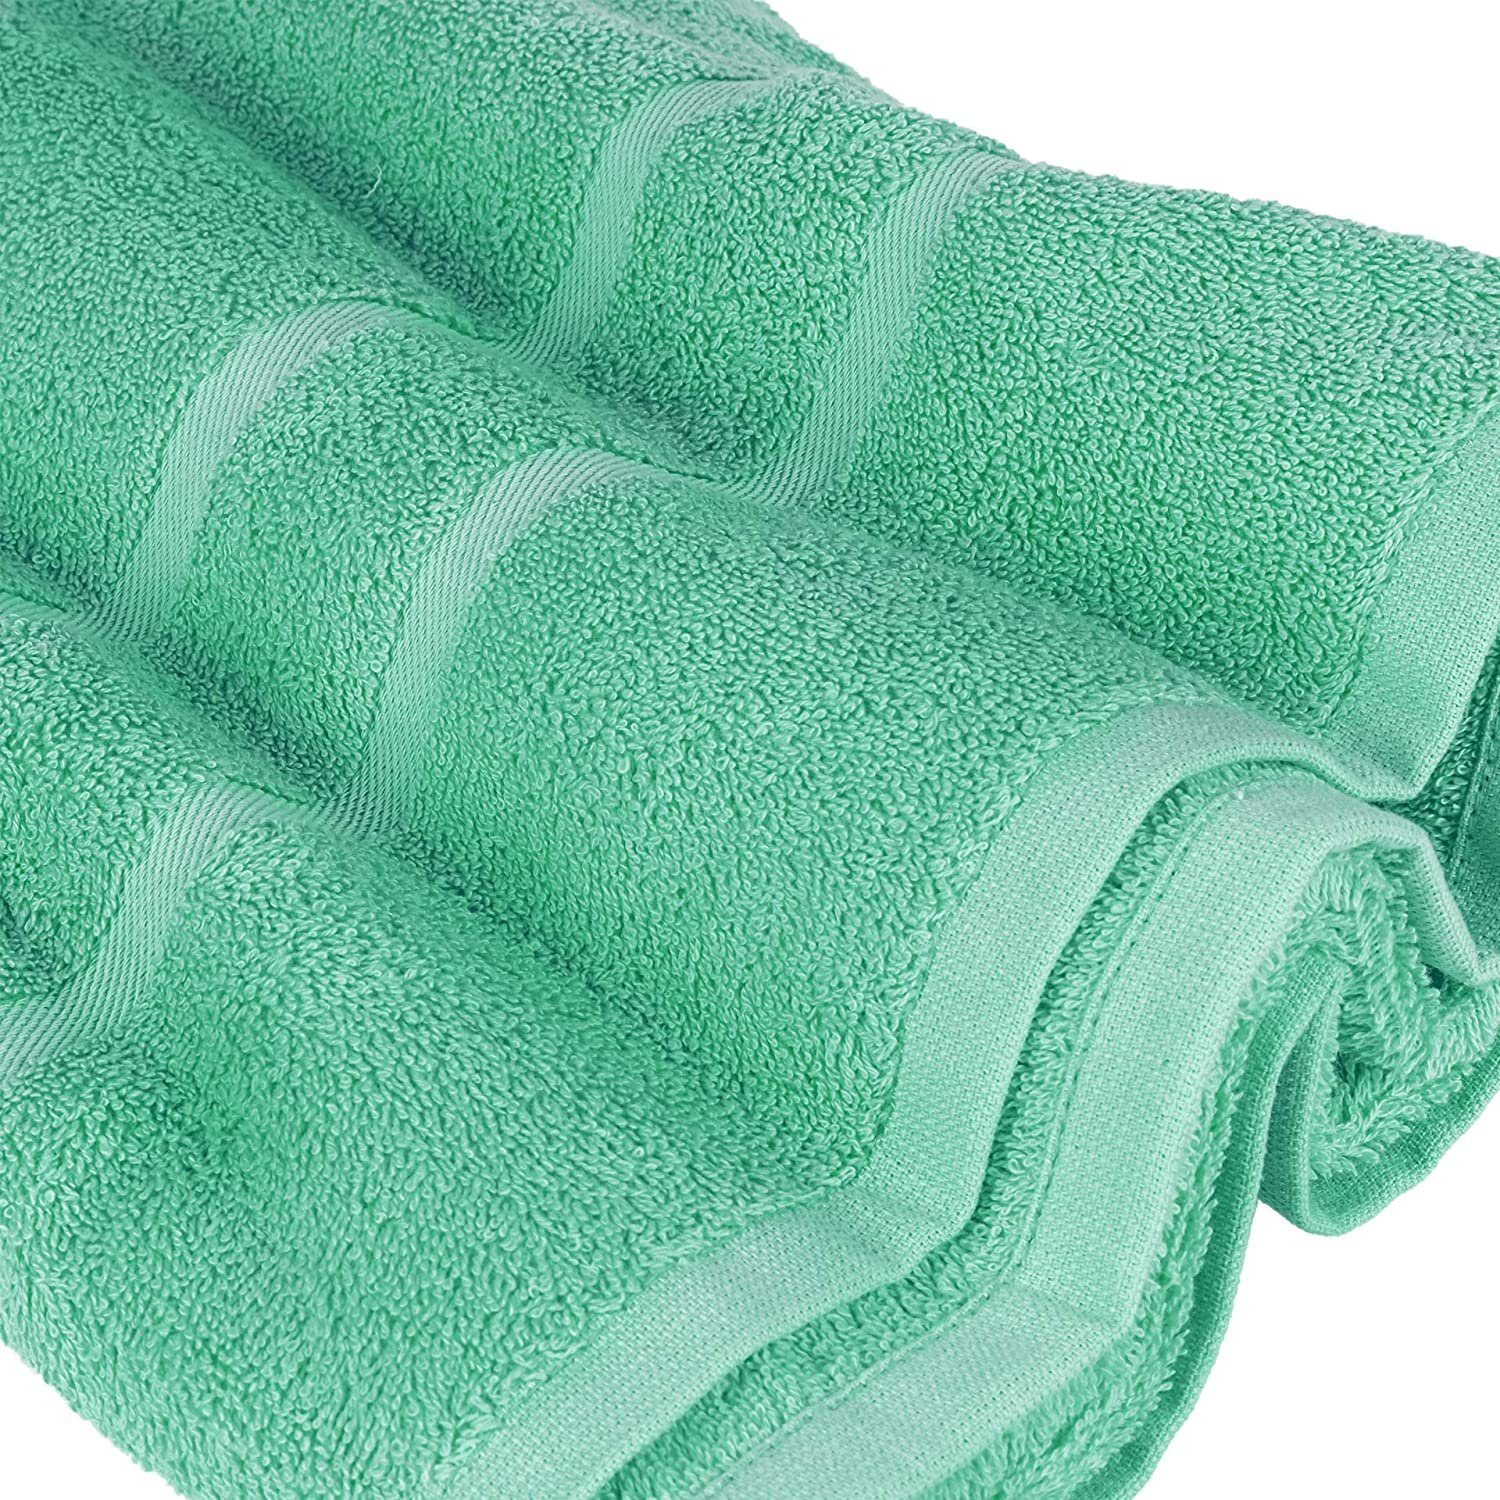 StickandShine Handtuch in Handtücher Gästehandtücher Saunatücher Baumwolle 100% Smaragdgrün 500 Wahl zur Badetücher Duschtücher GSM